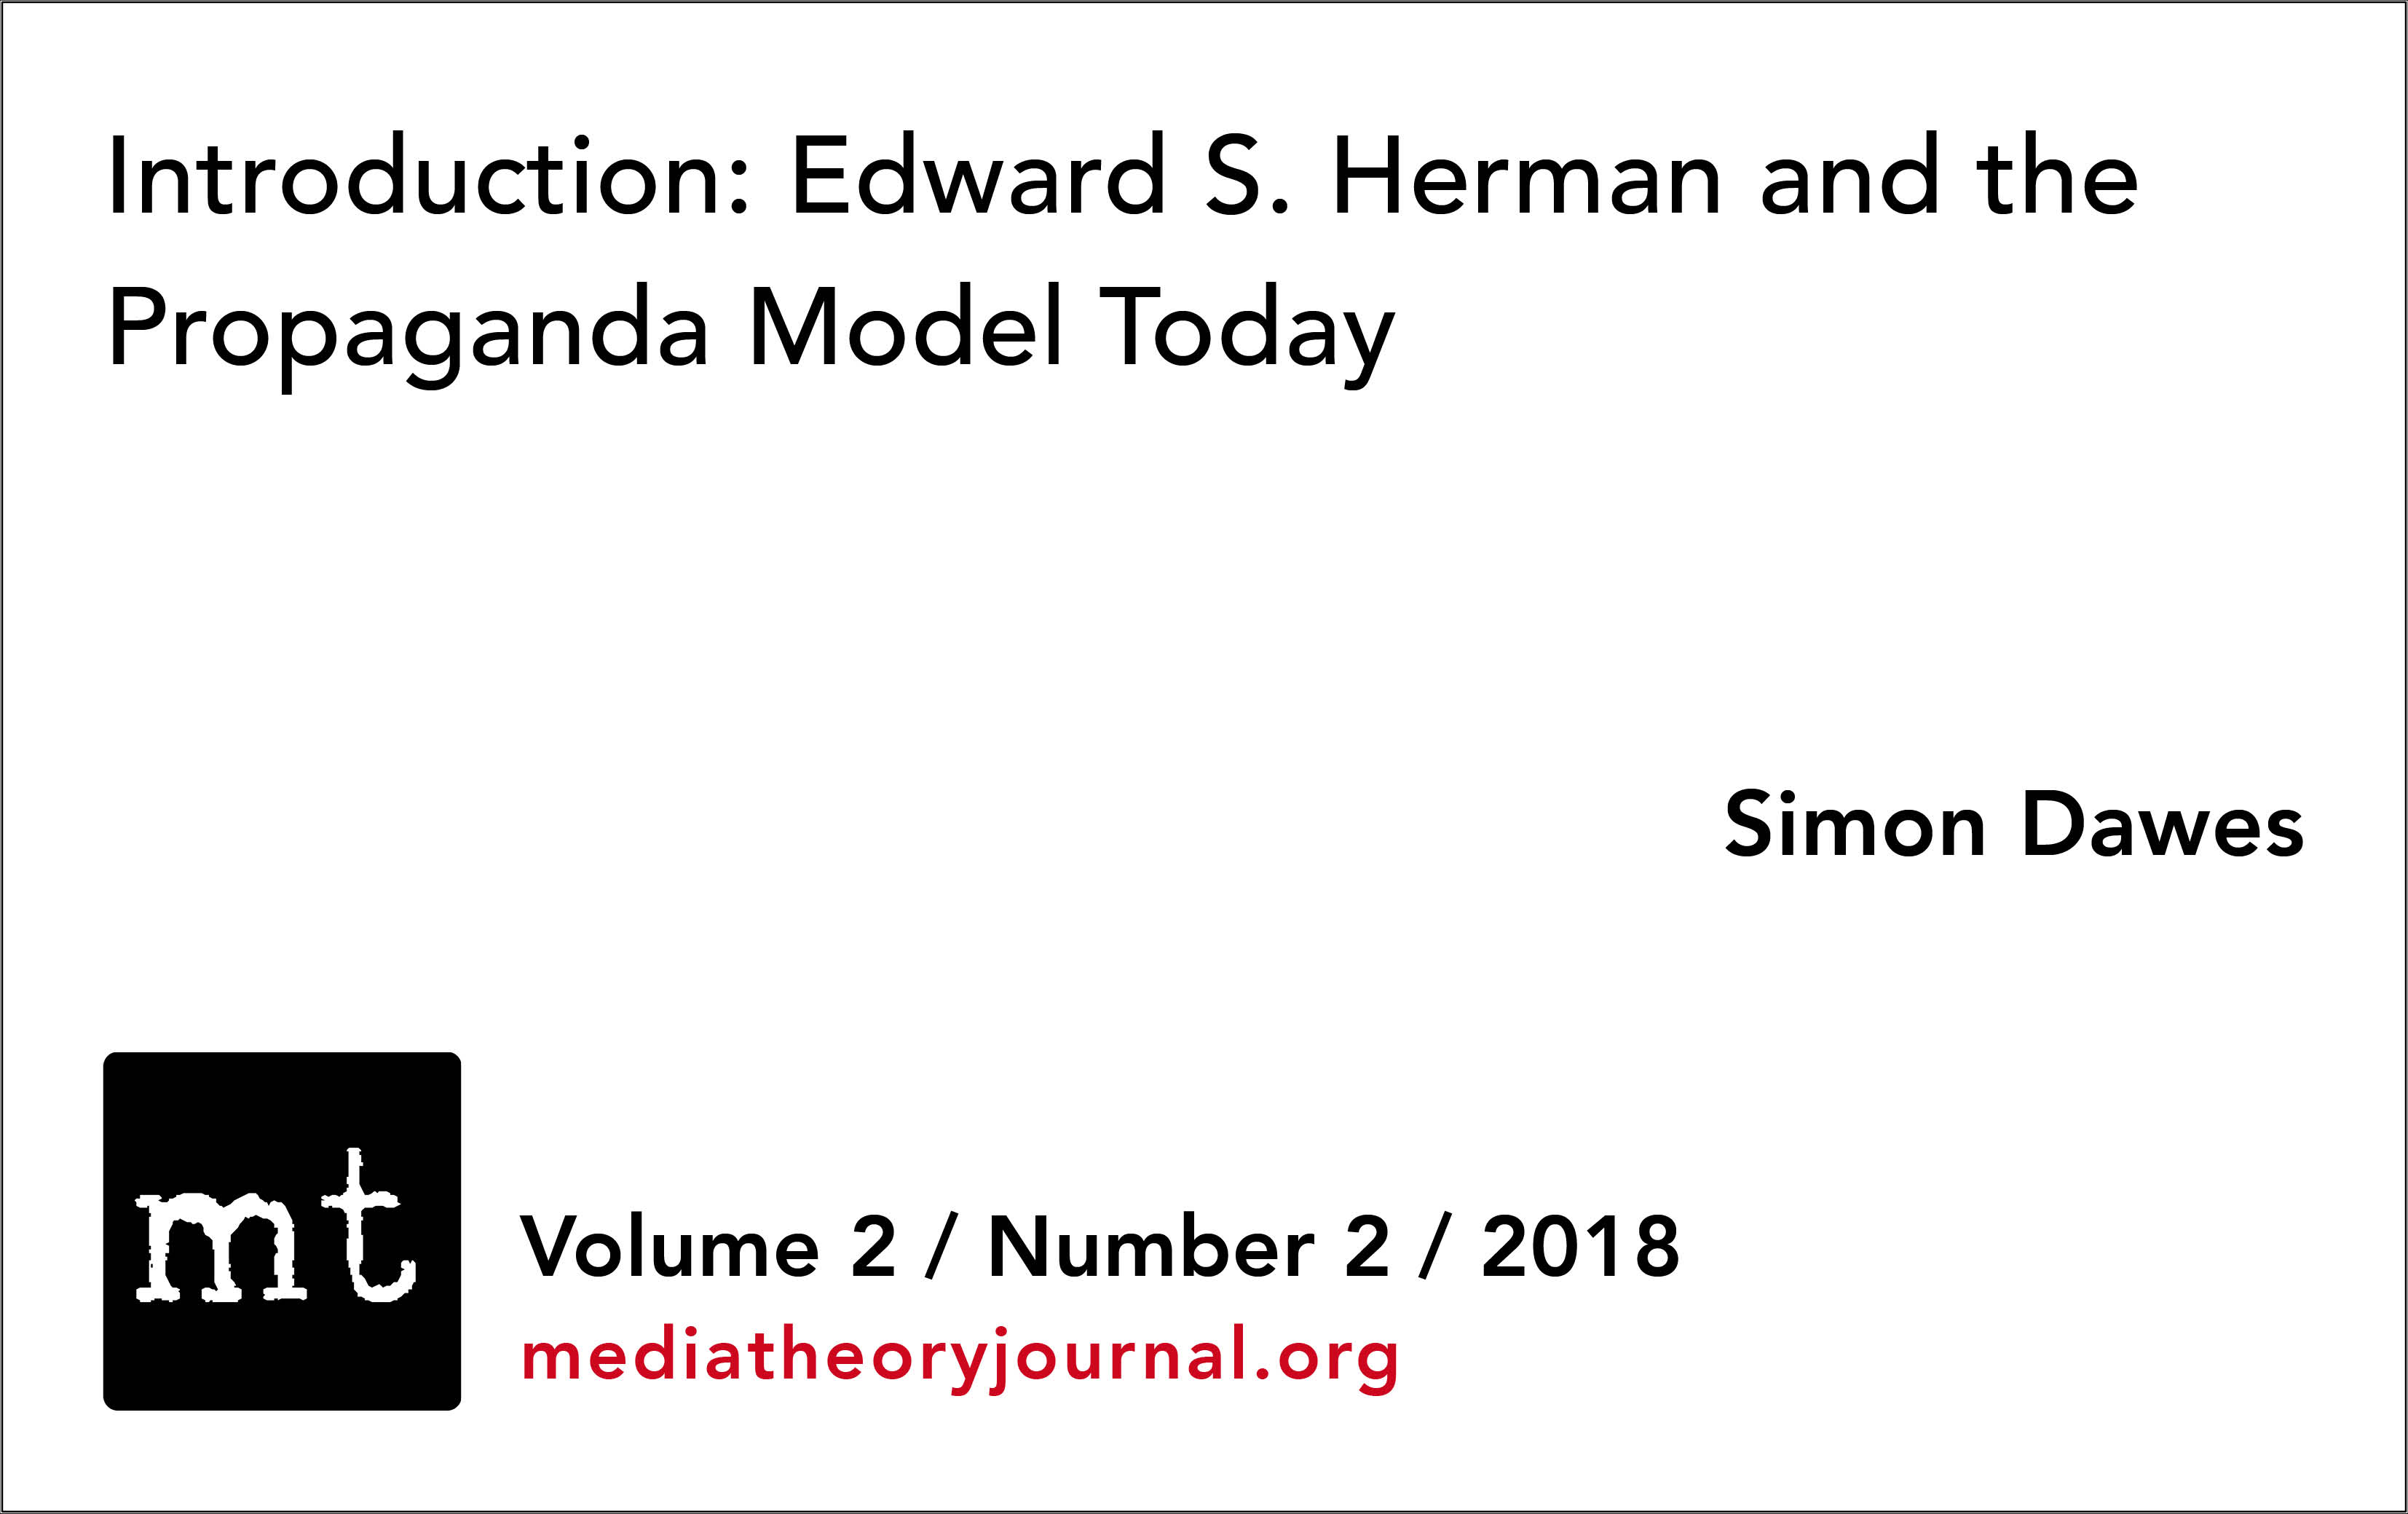 Simon Dawes: Edward S. Herman and the Propaganda Model Today